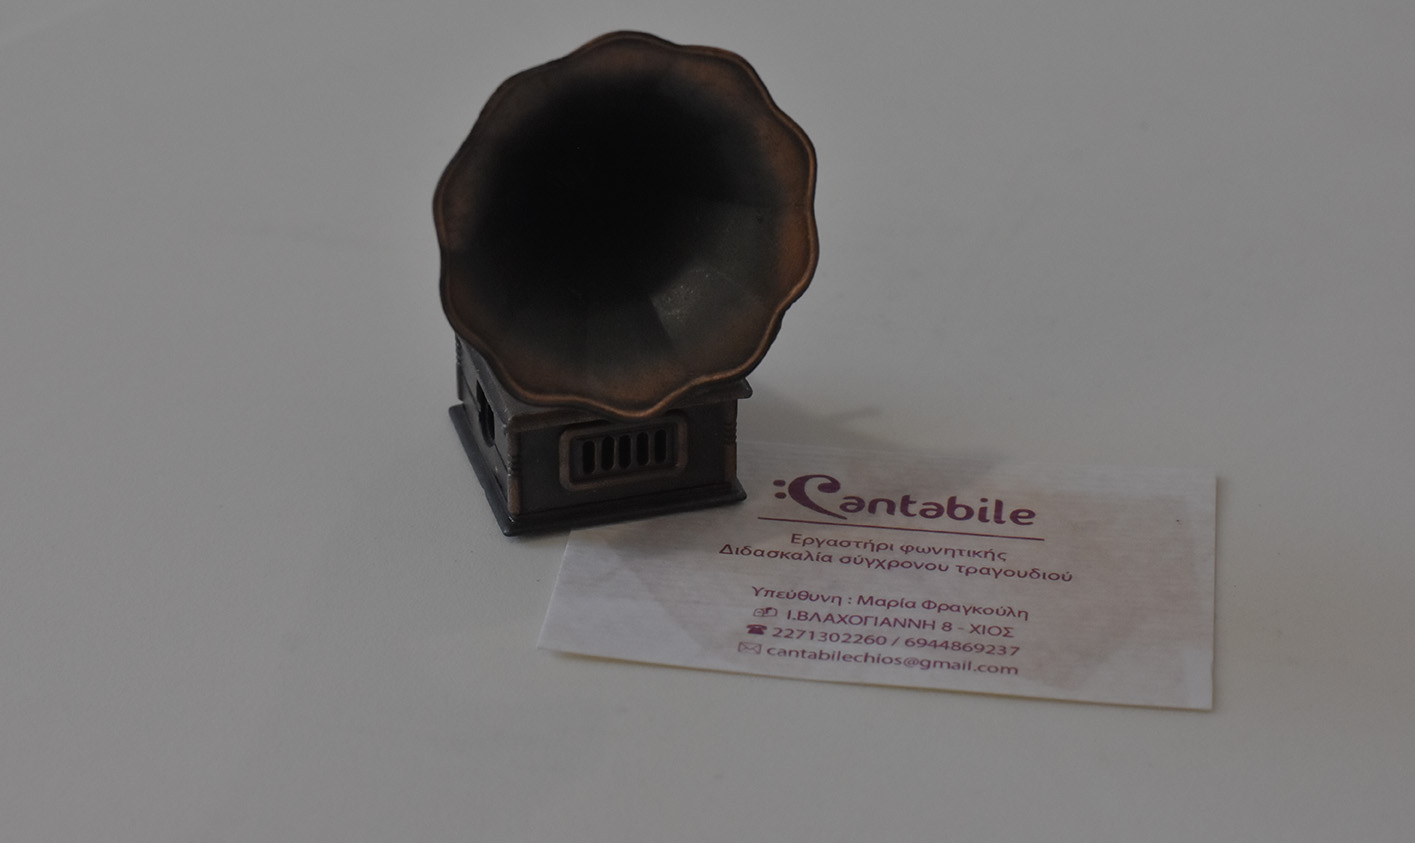 Cantabile - Εργαστήρι